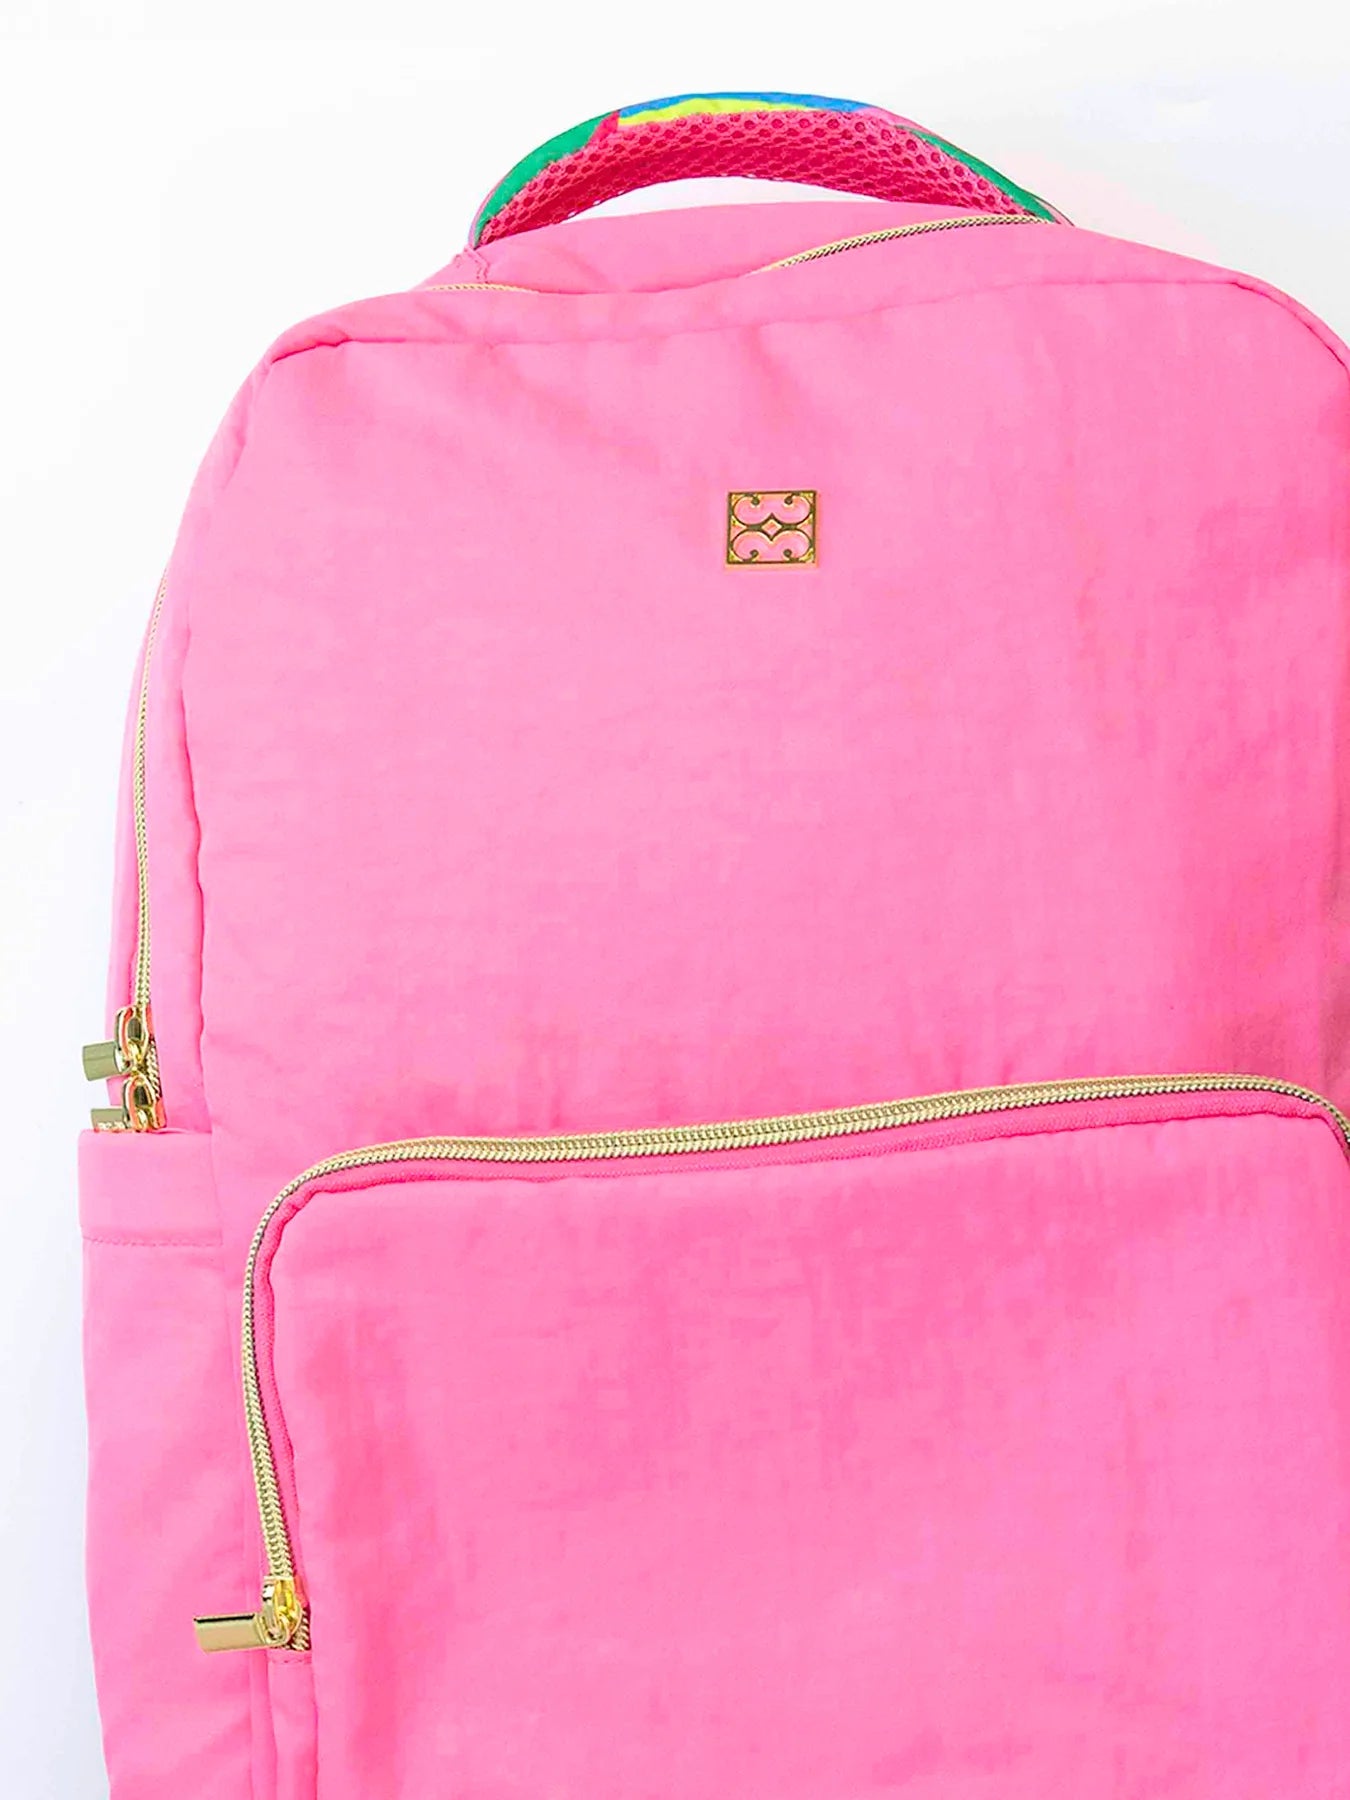 Pink Travel Backpack